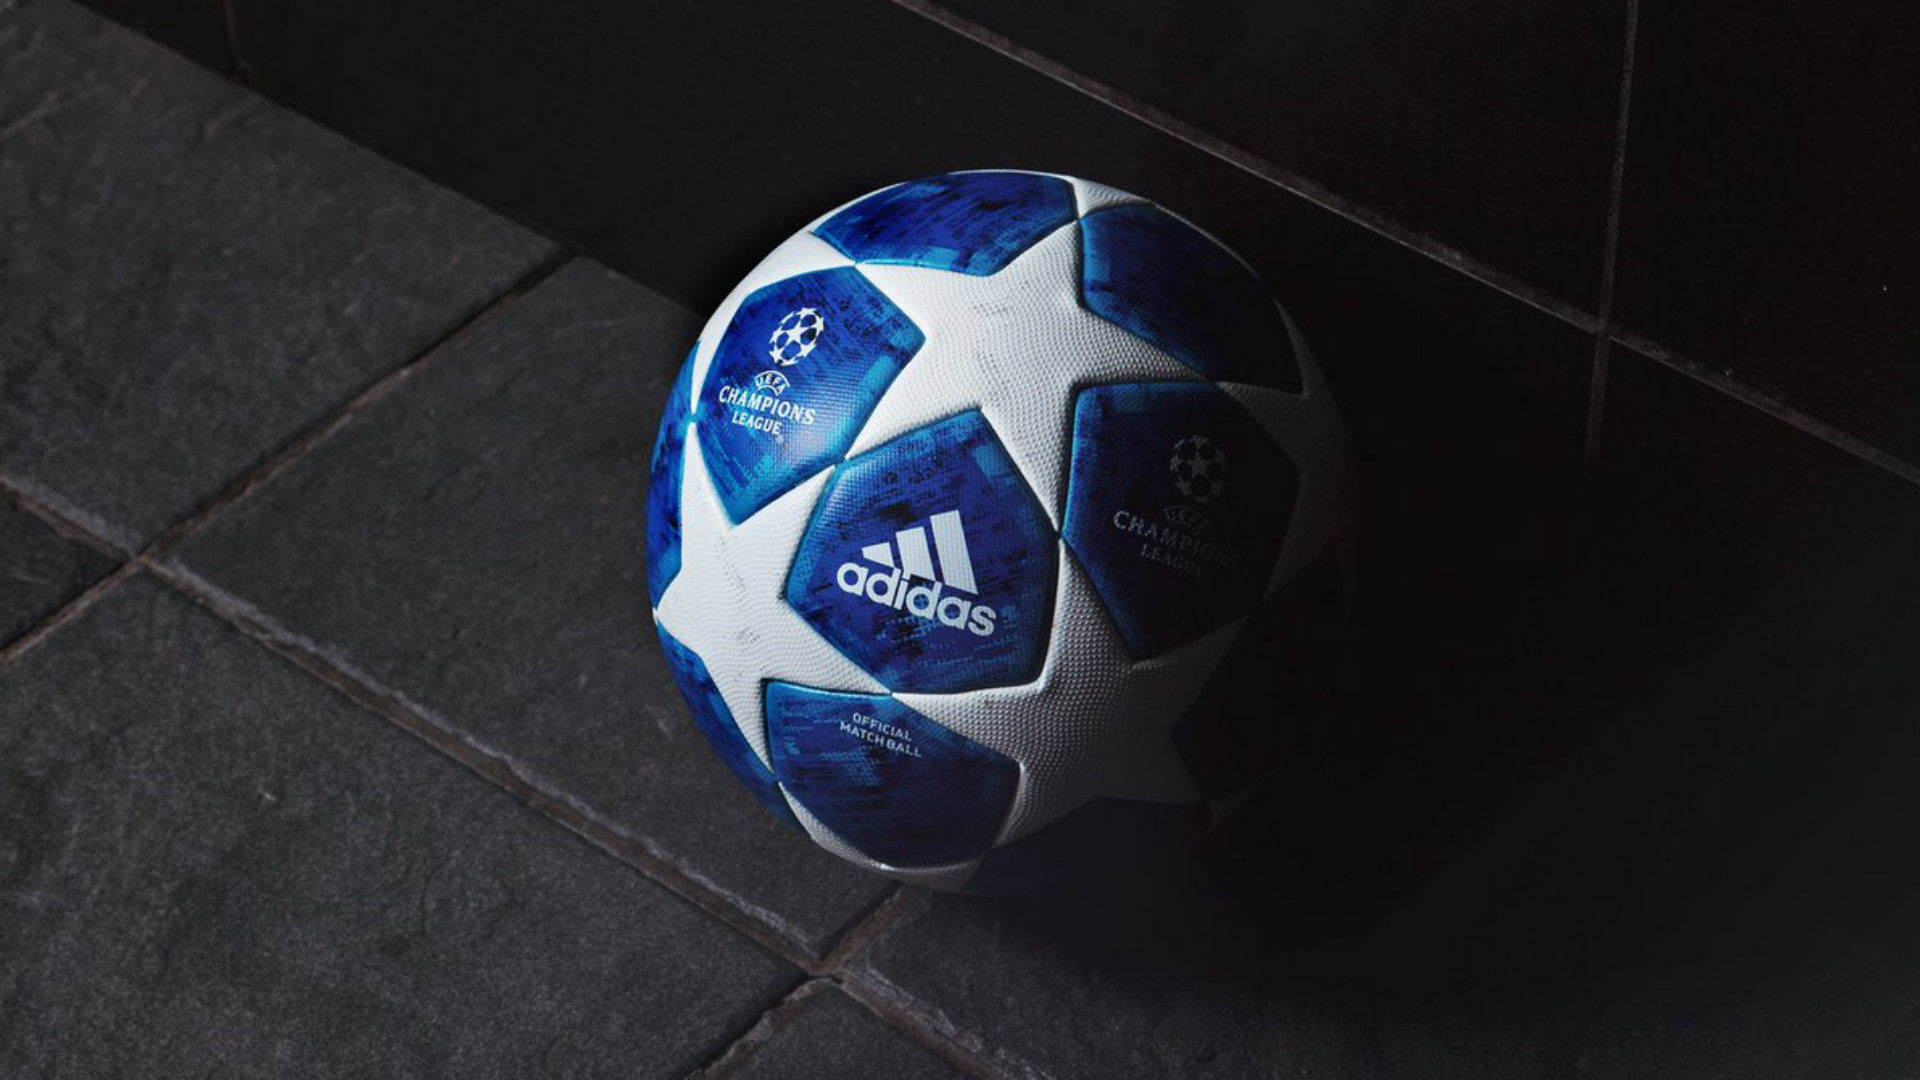 uefa champions league 2018 ball